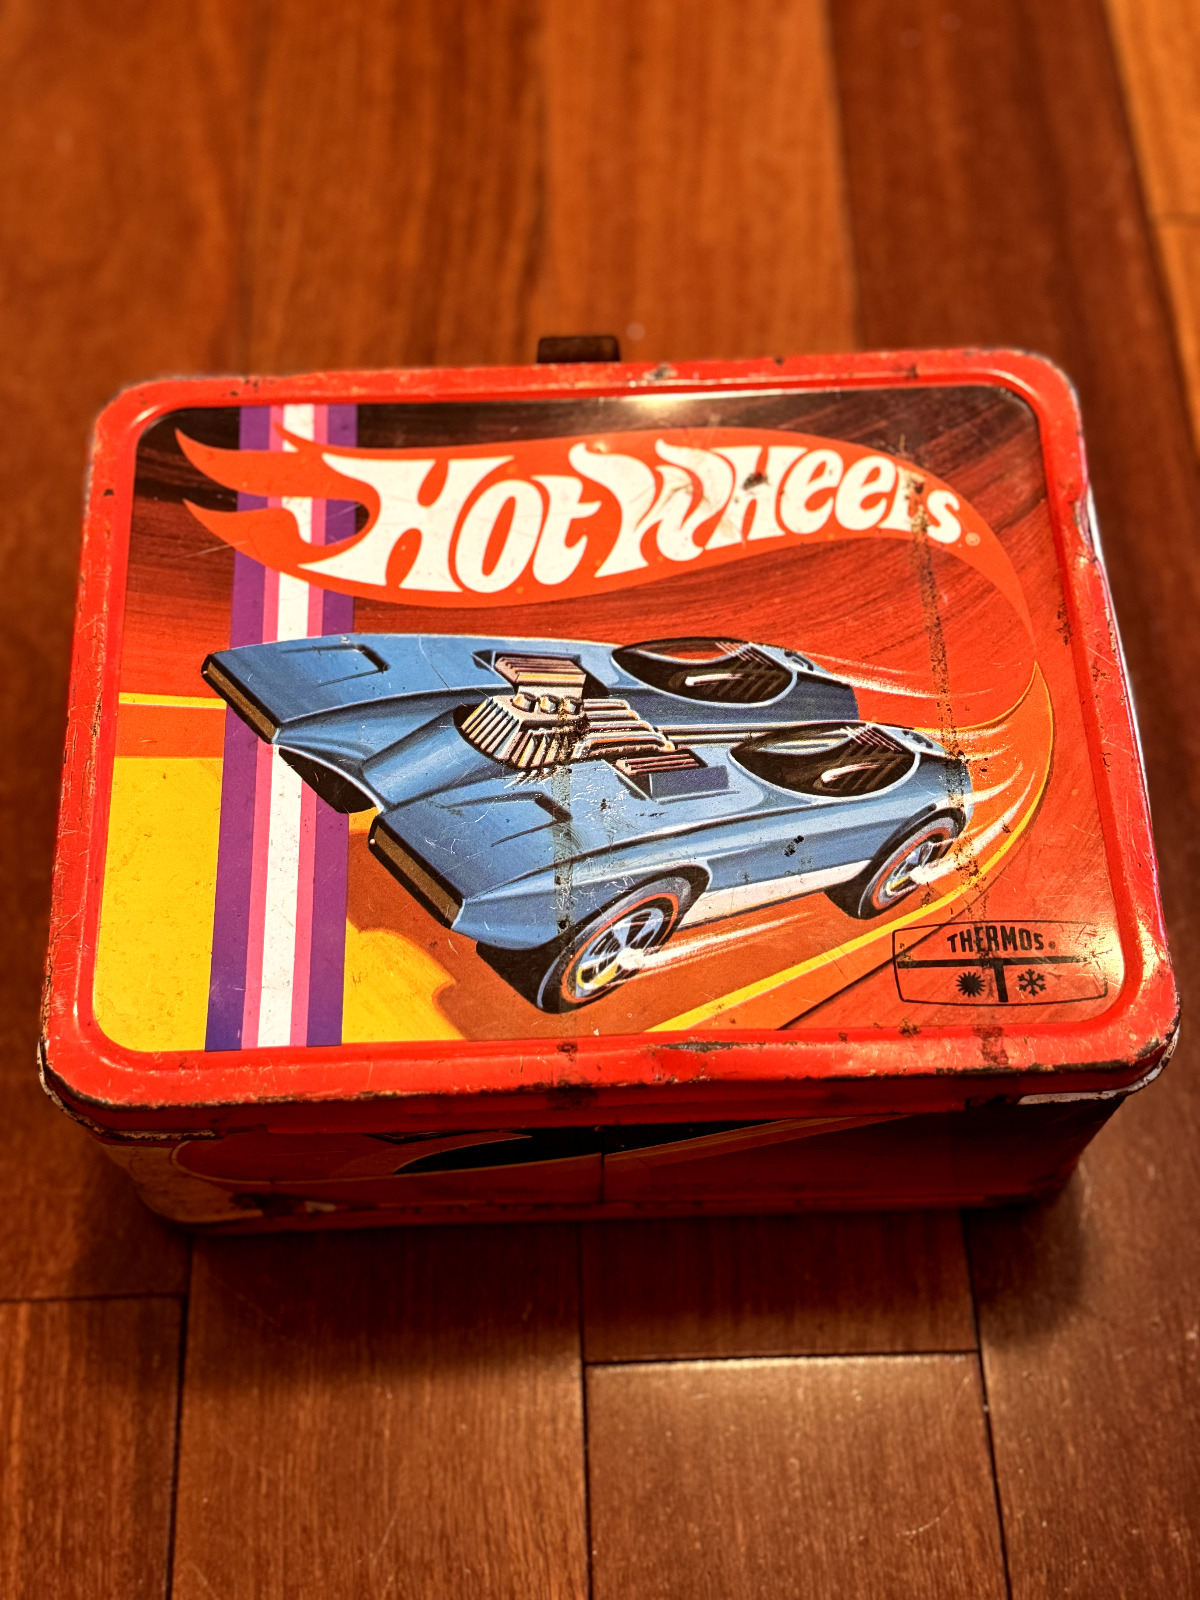 Hot Wheels Lunchbox Vintage Original 1969 Redline no thermos